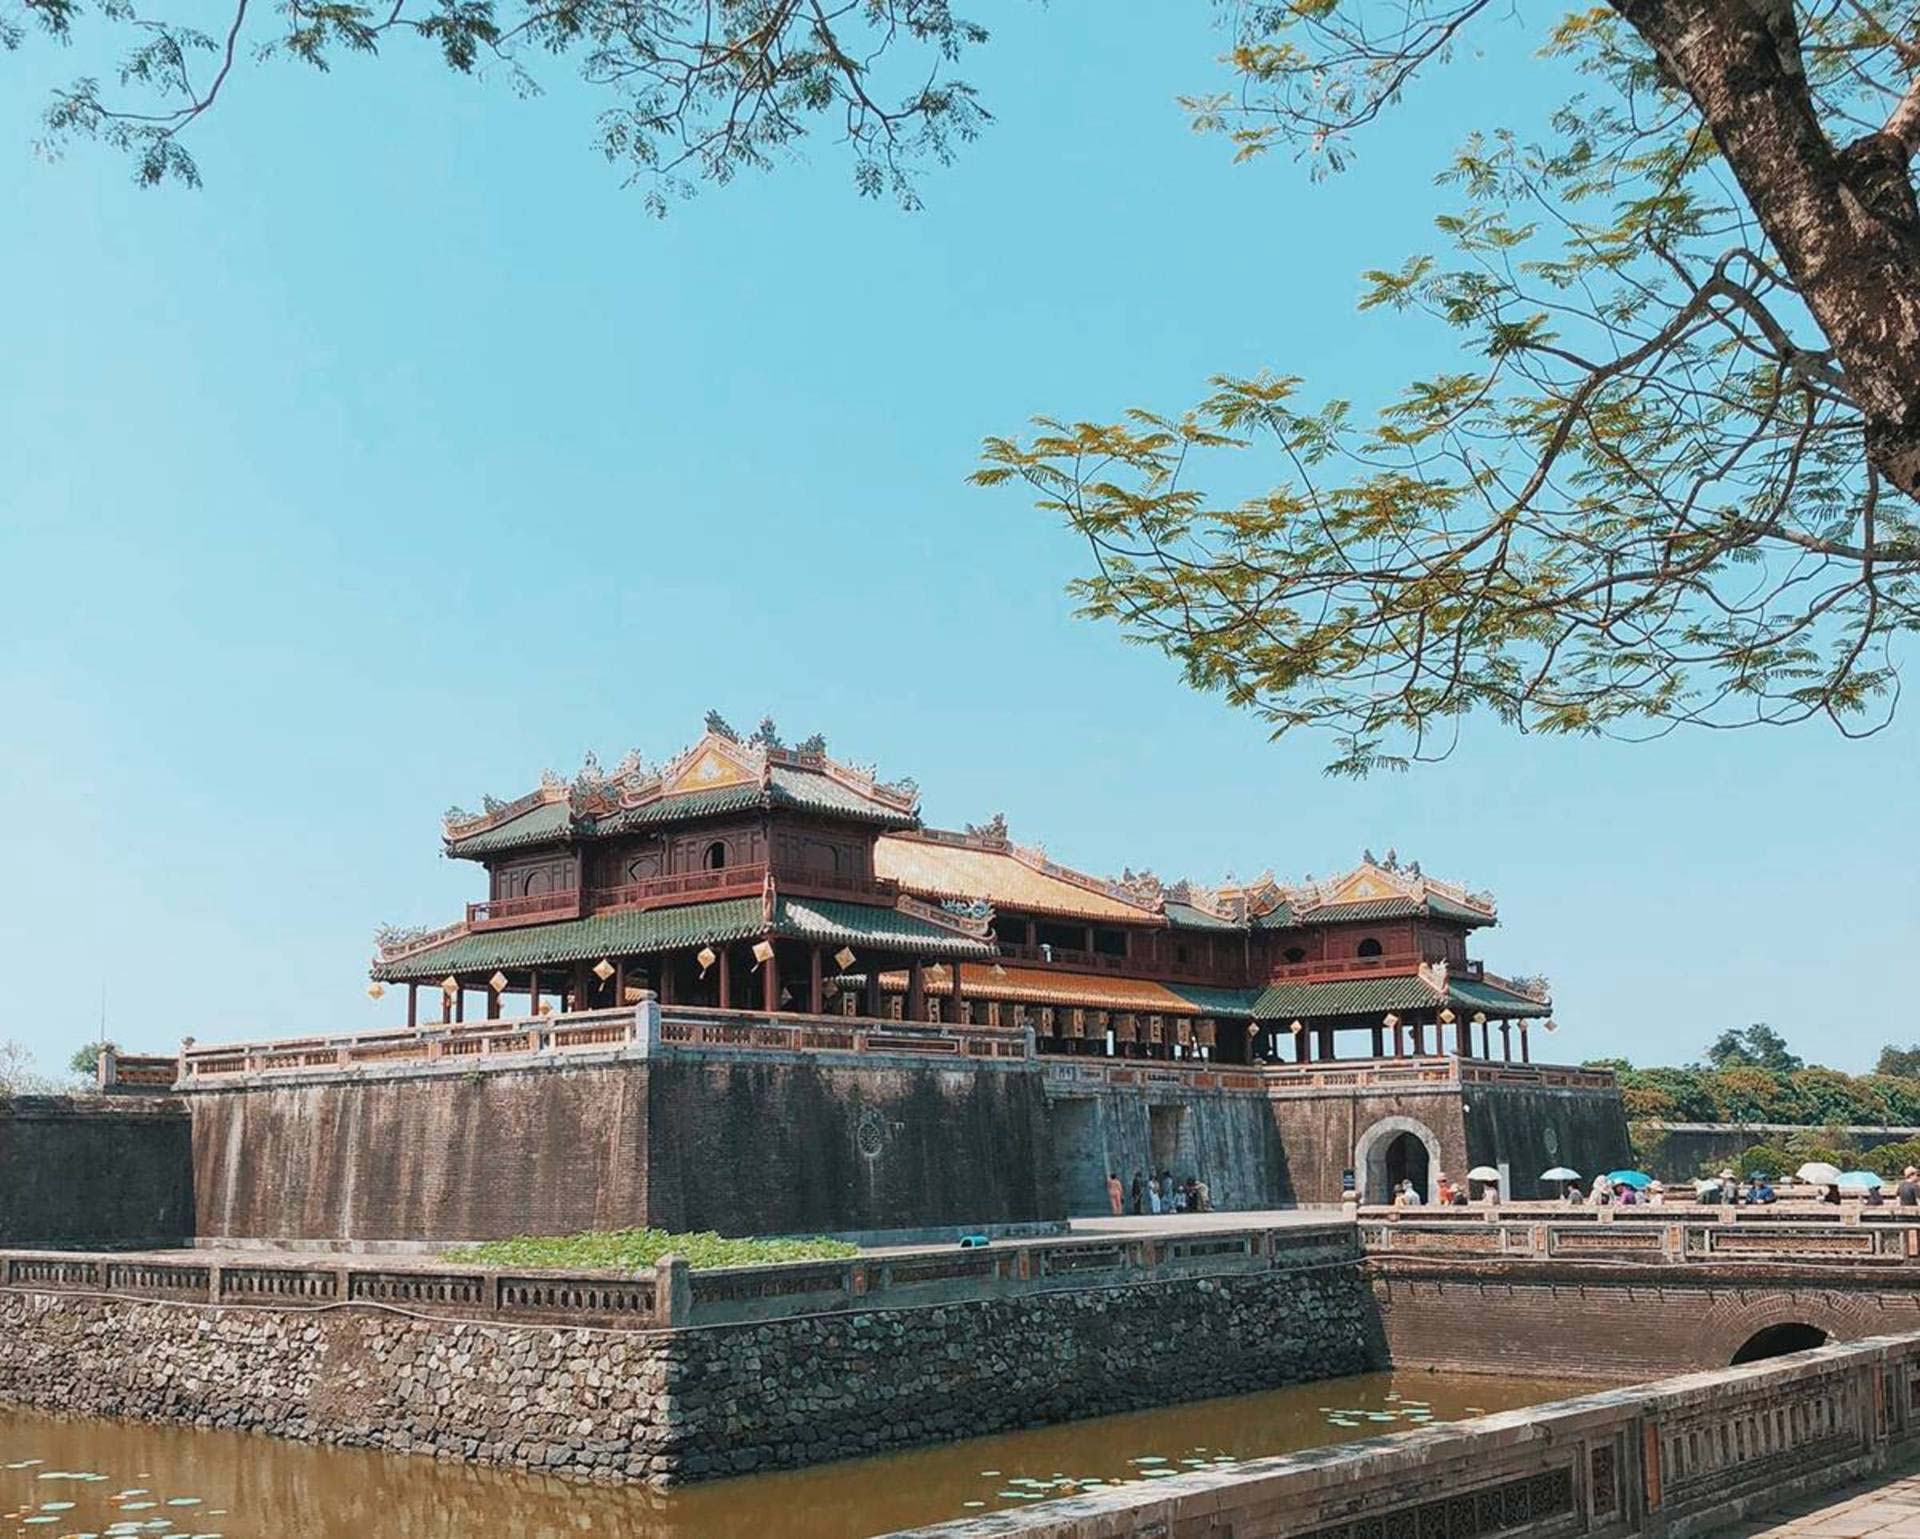 Three Vietnamese attractions among Asia’s hidden gems